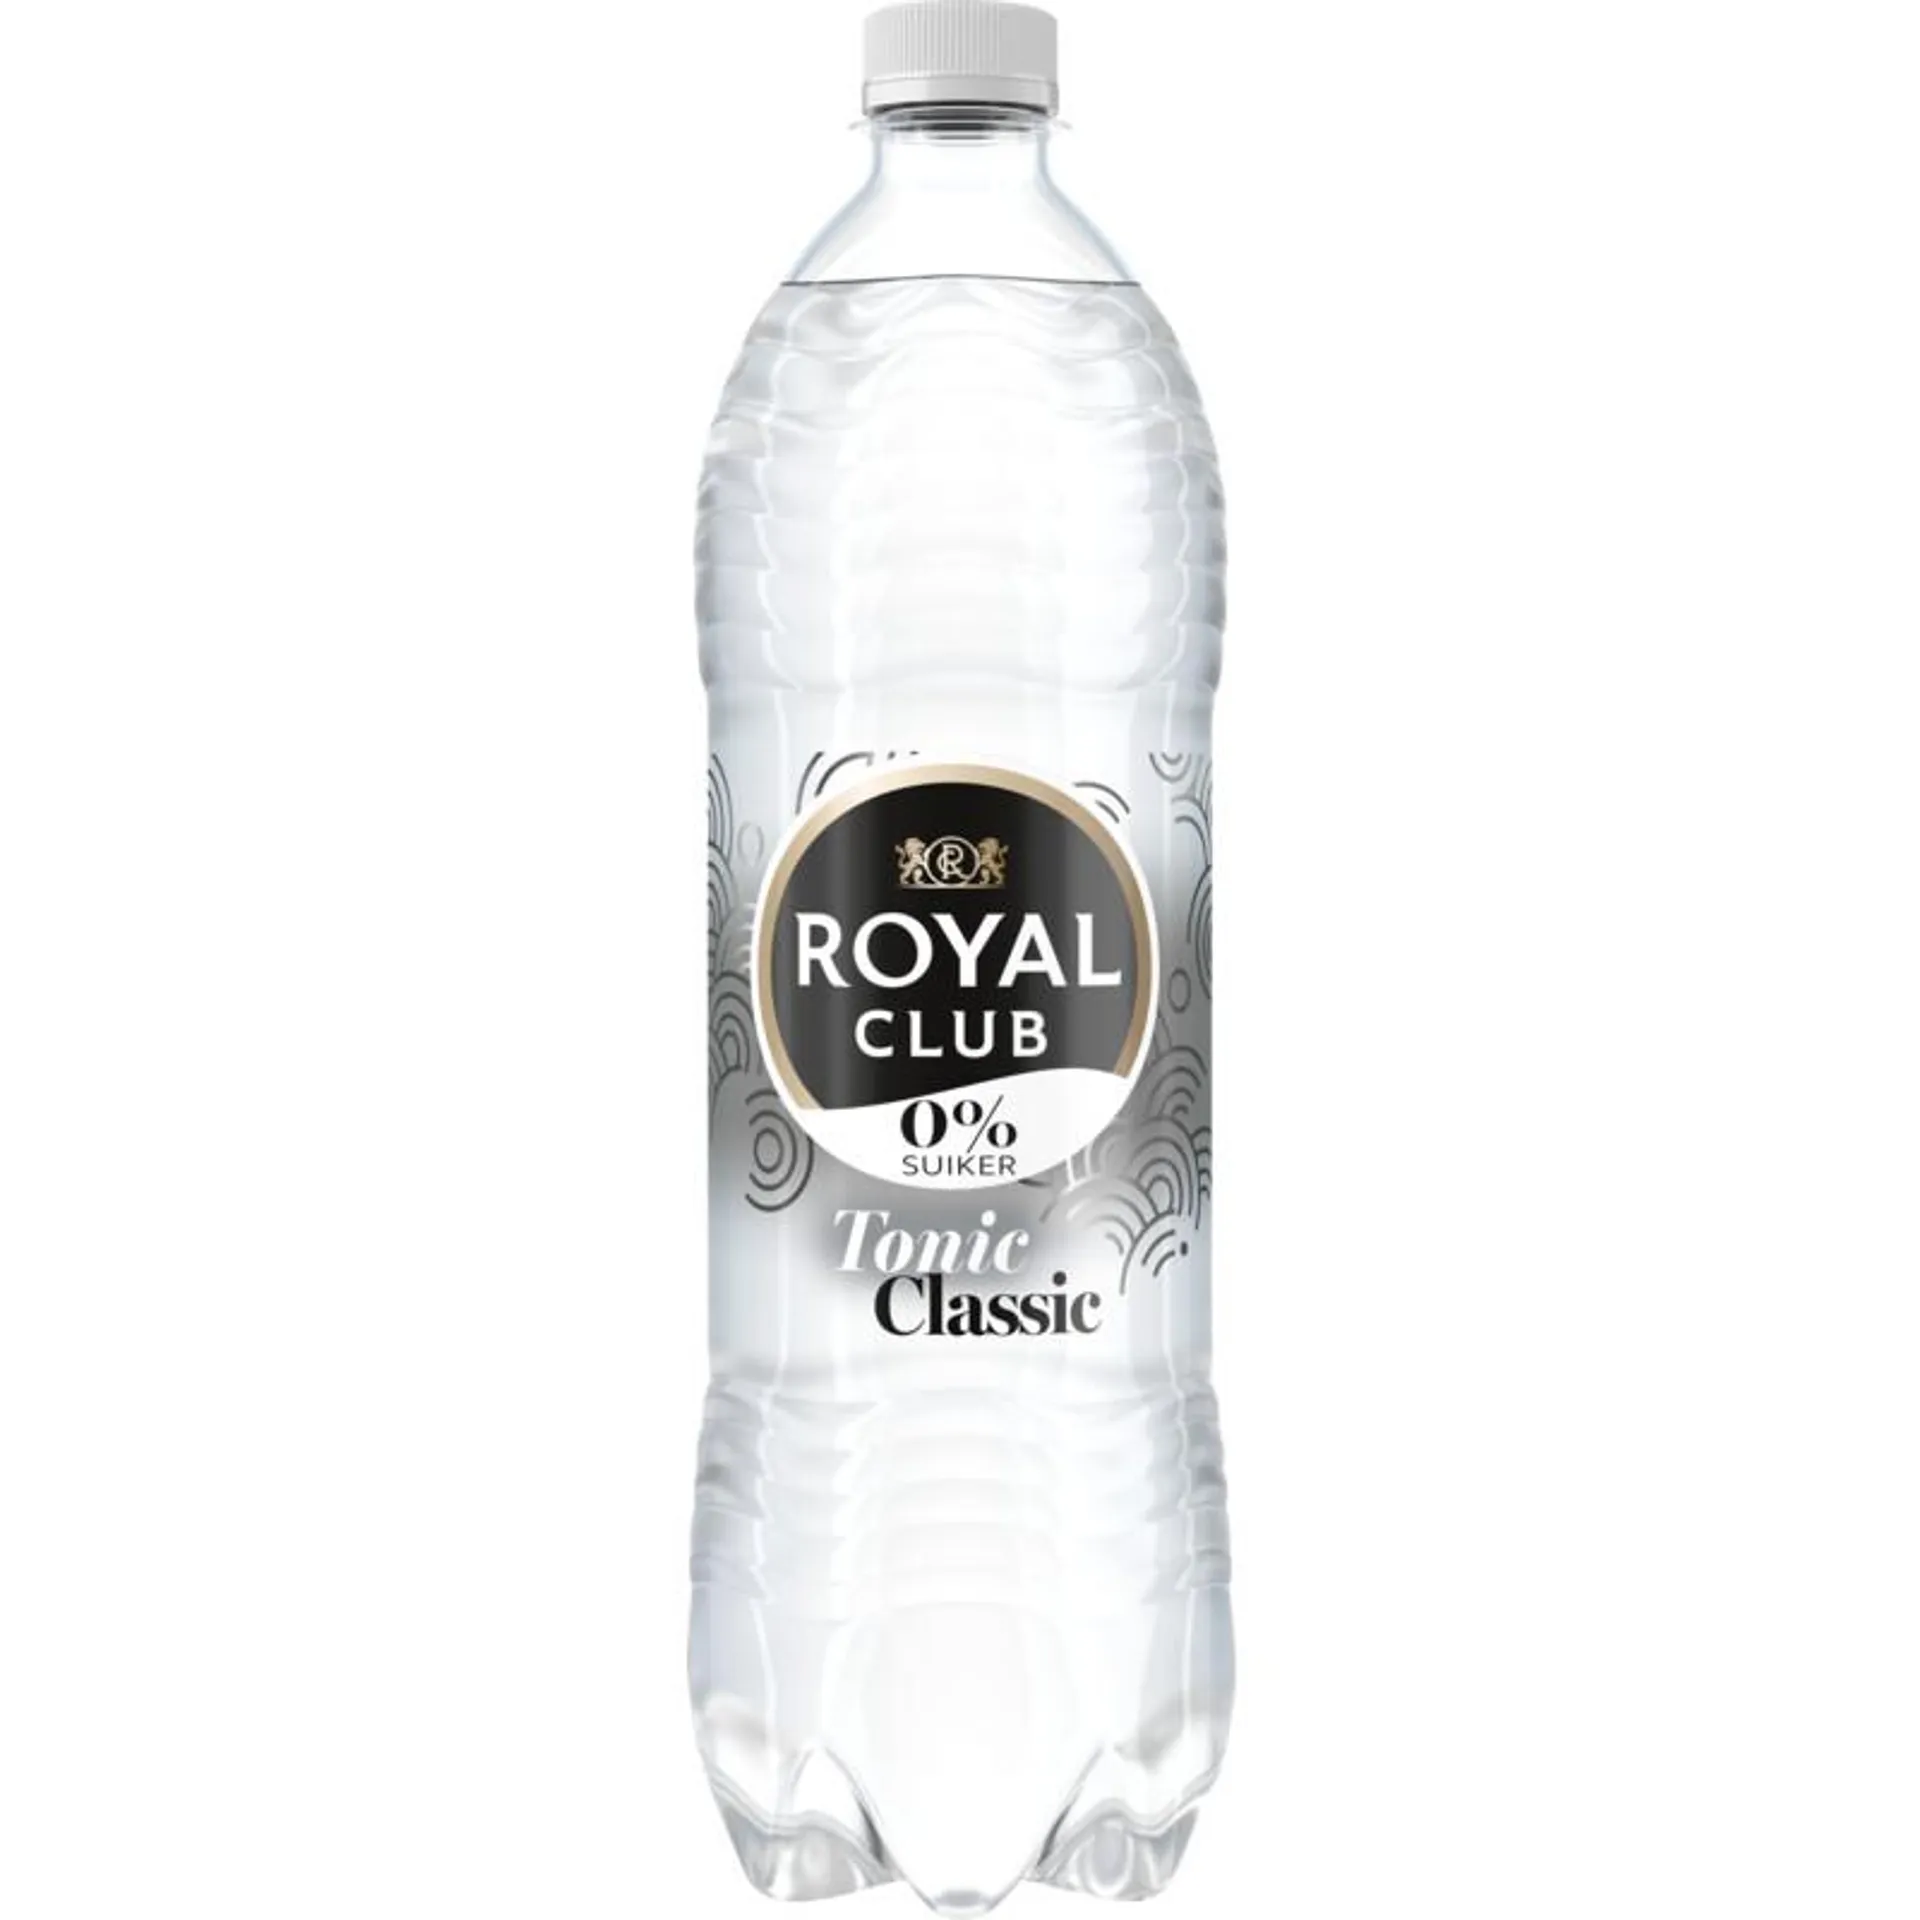 Royal Club Tonic classic 0% suiker